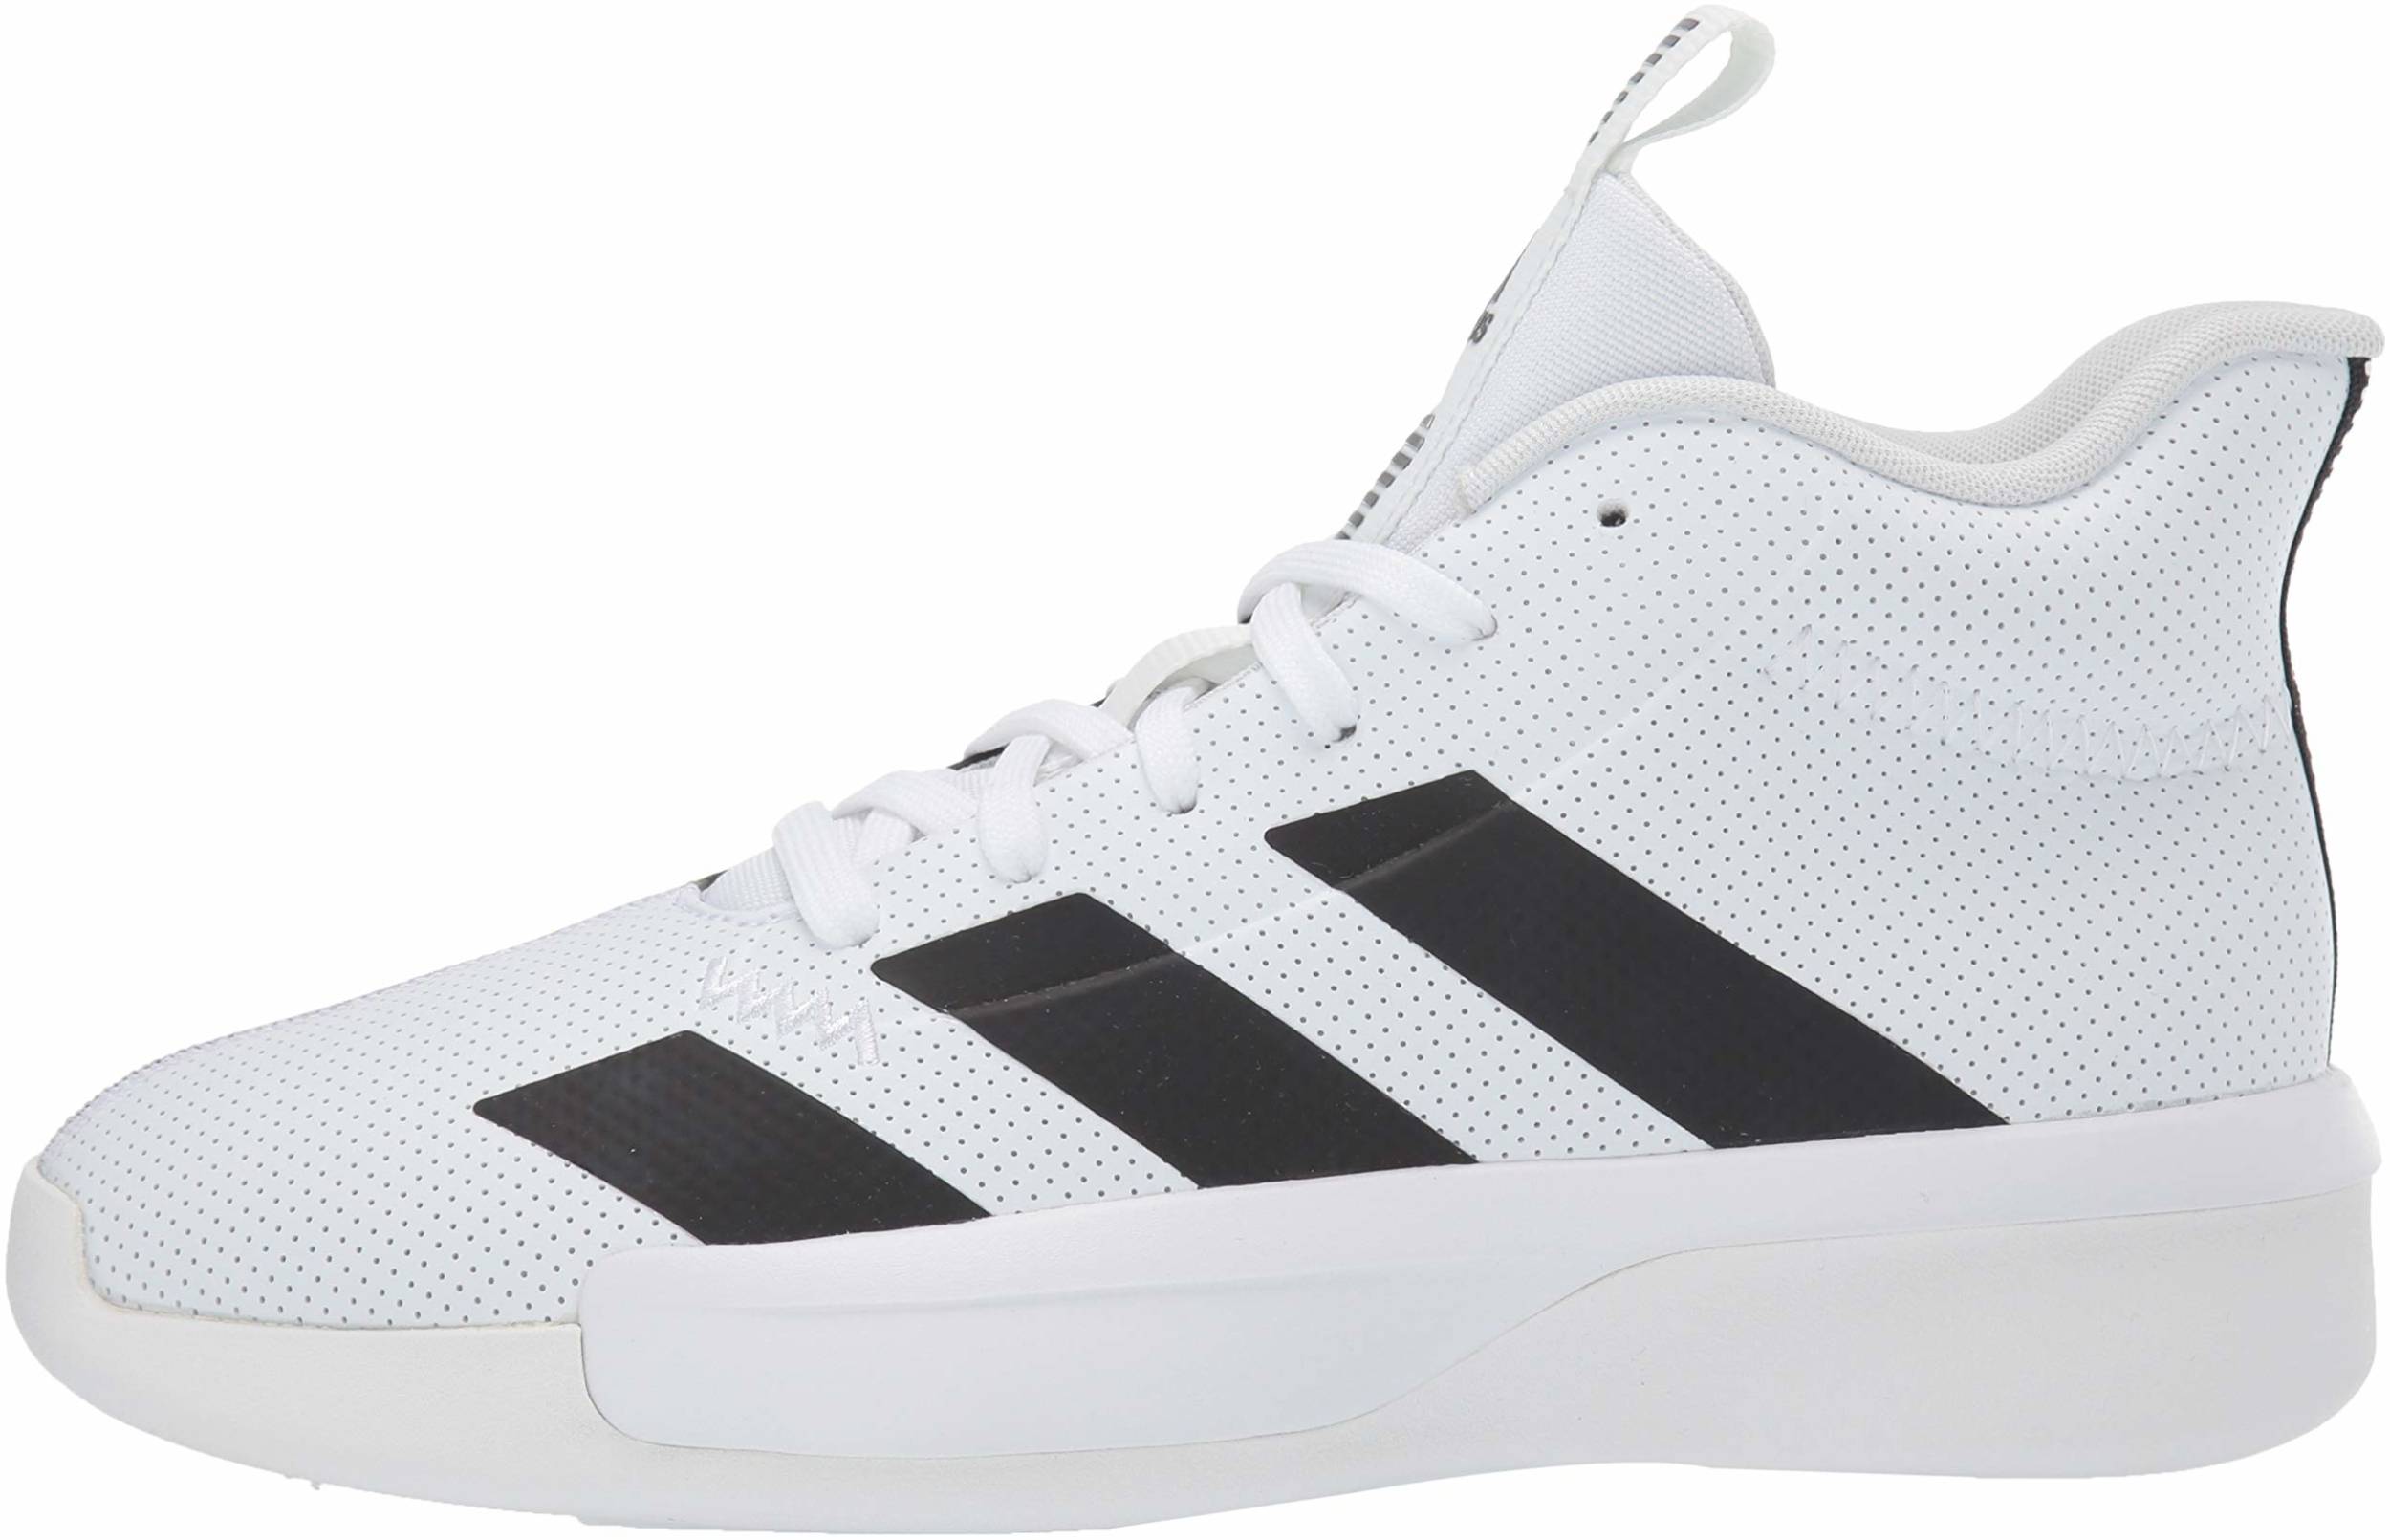 White Adidas Basketball Shoes 